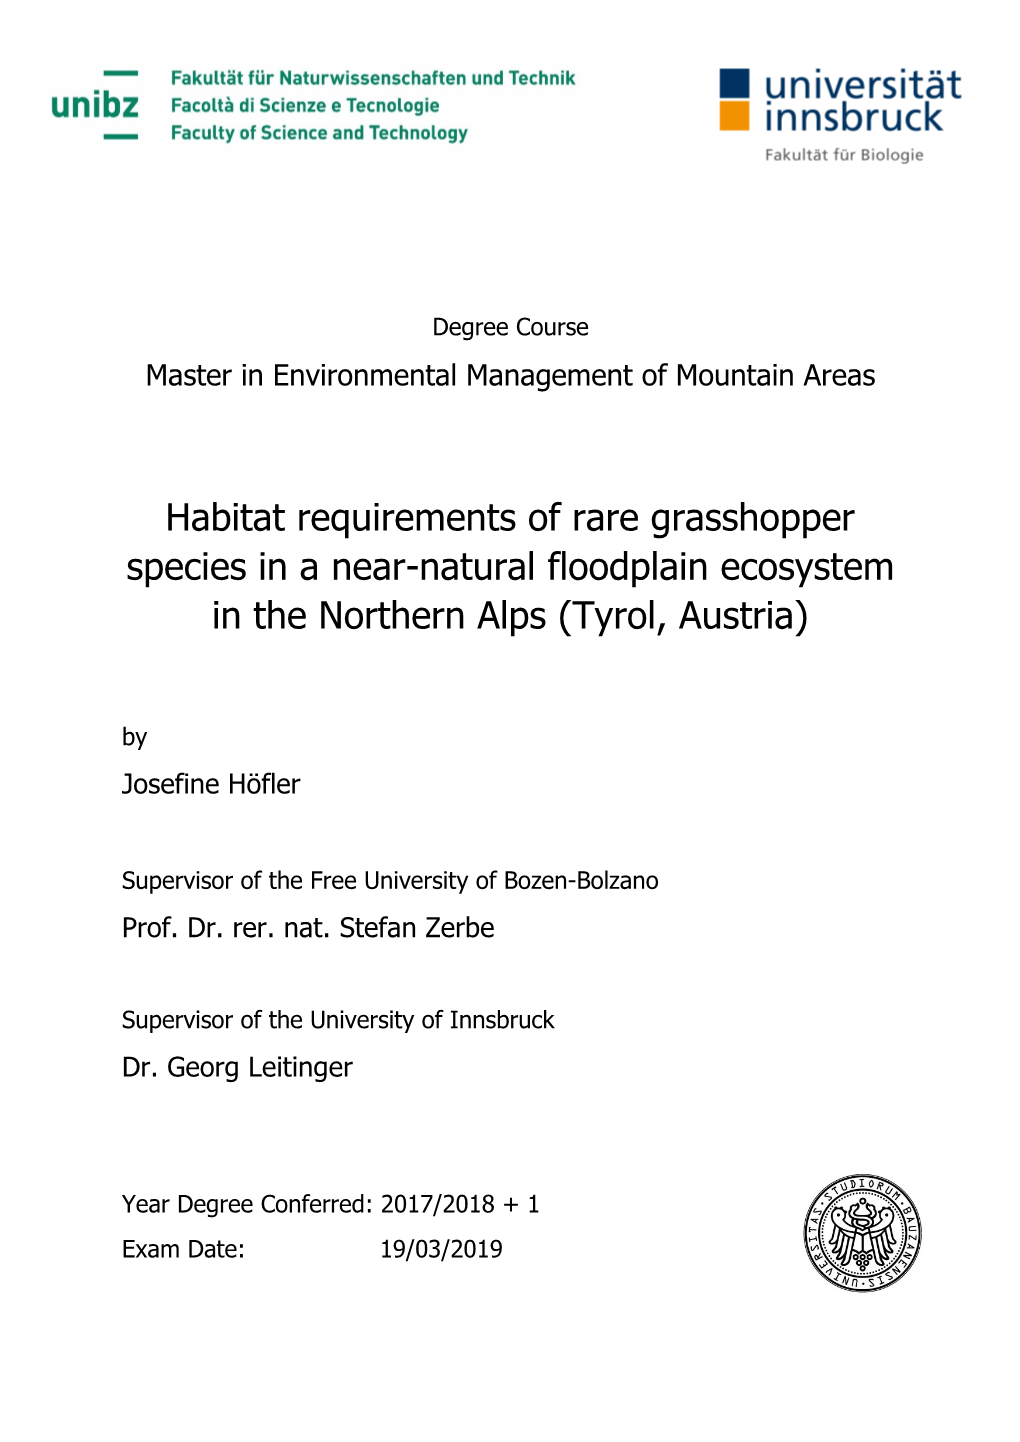 Habitat Requirements of Rare Grasshopper Species in a Near-Natural Floodplain Ecosystem in the Northern Alps (Tyrol, Austria) by Josefine Höfler